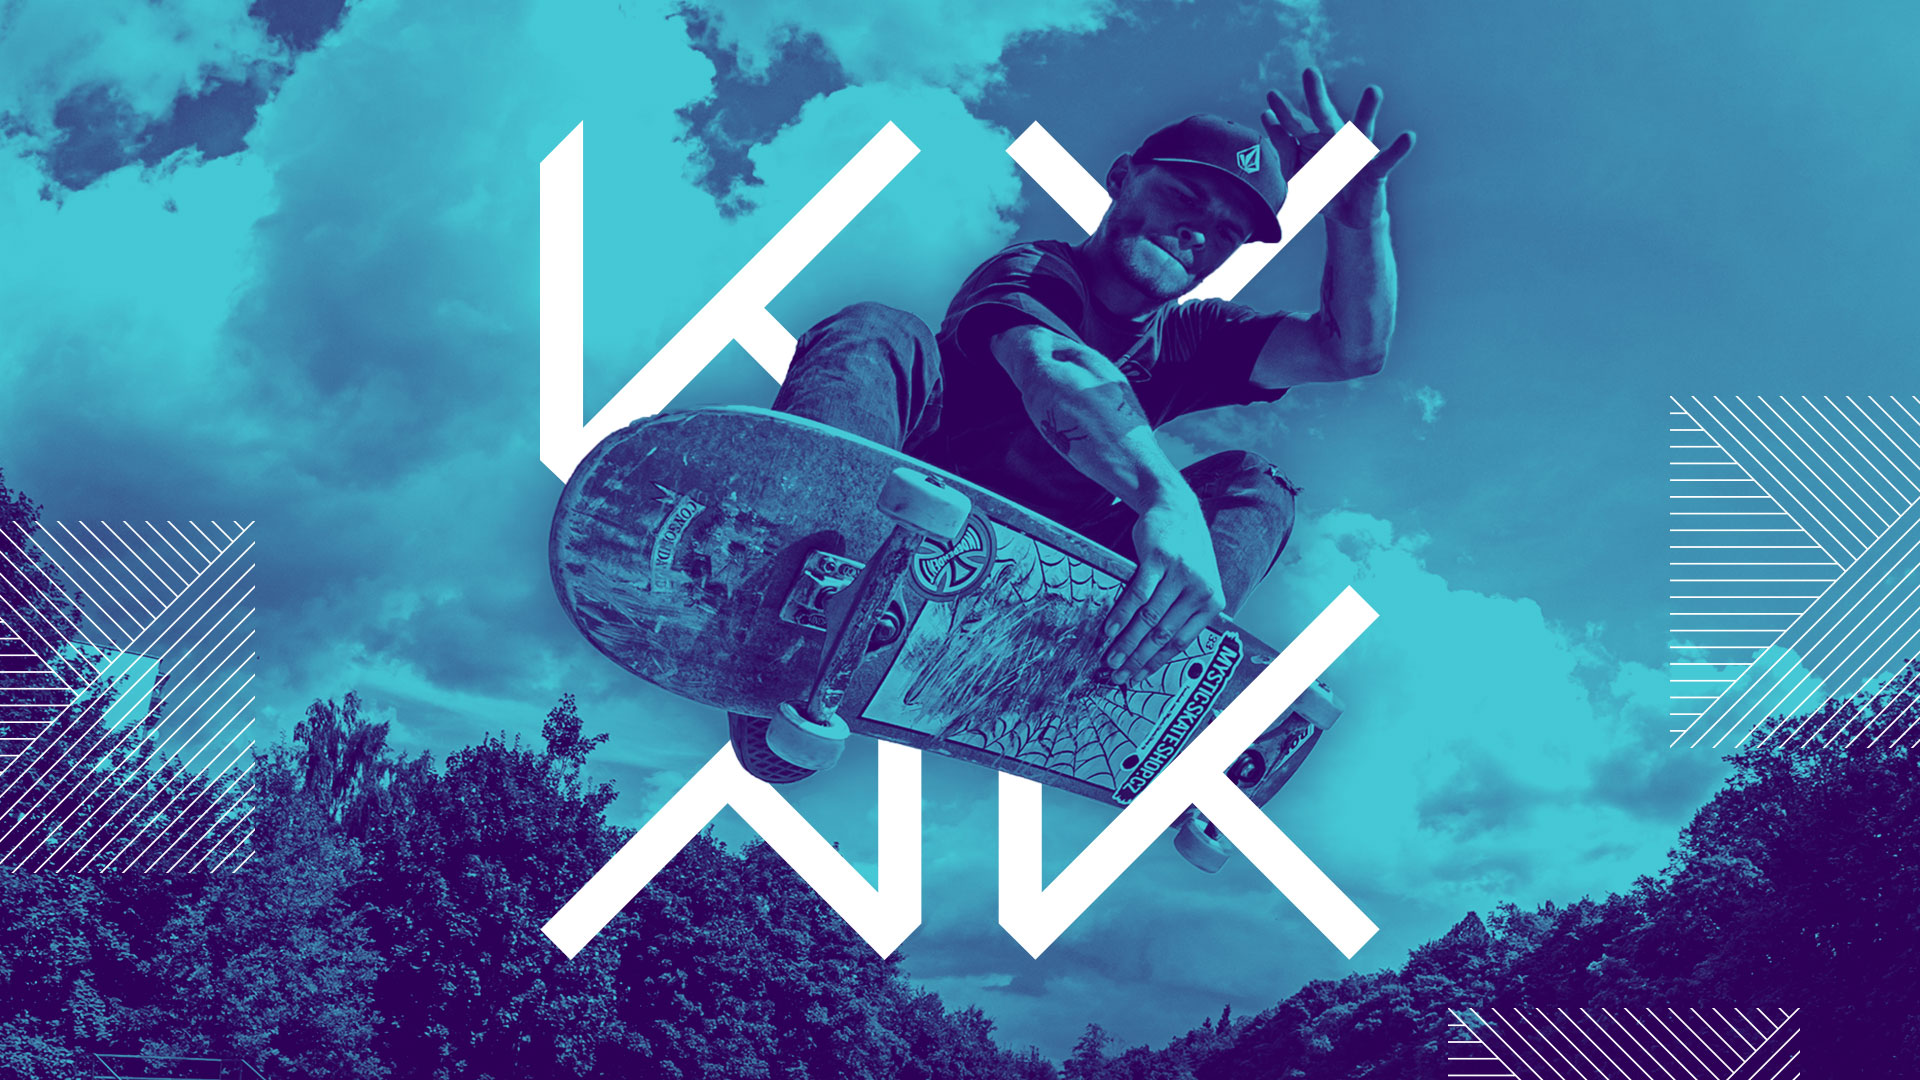 KYAK Studio Skateboarding image